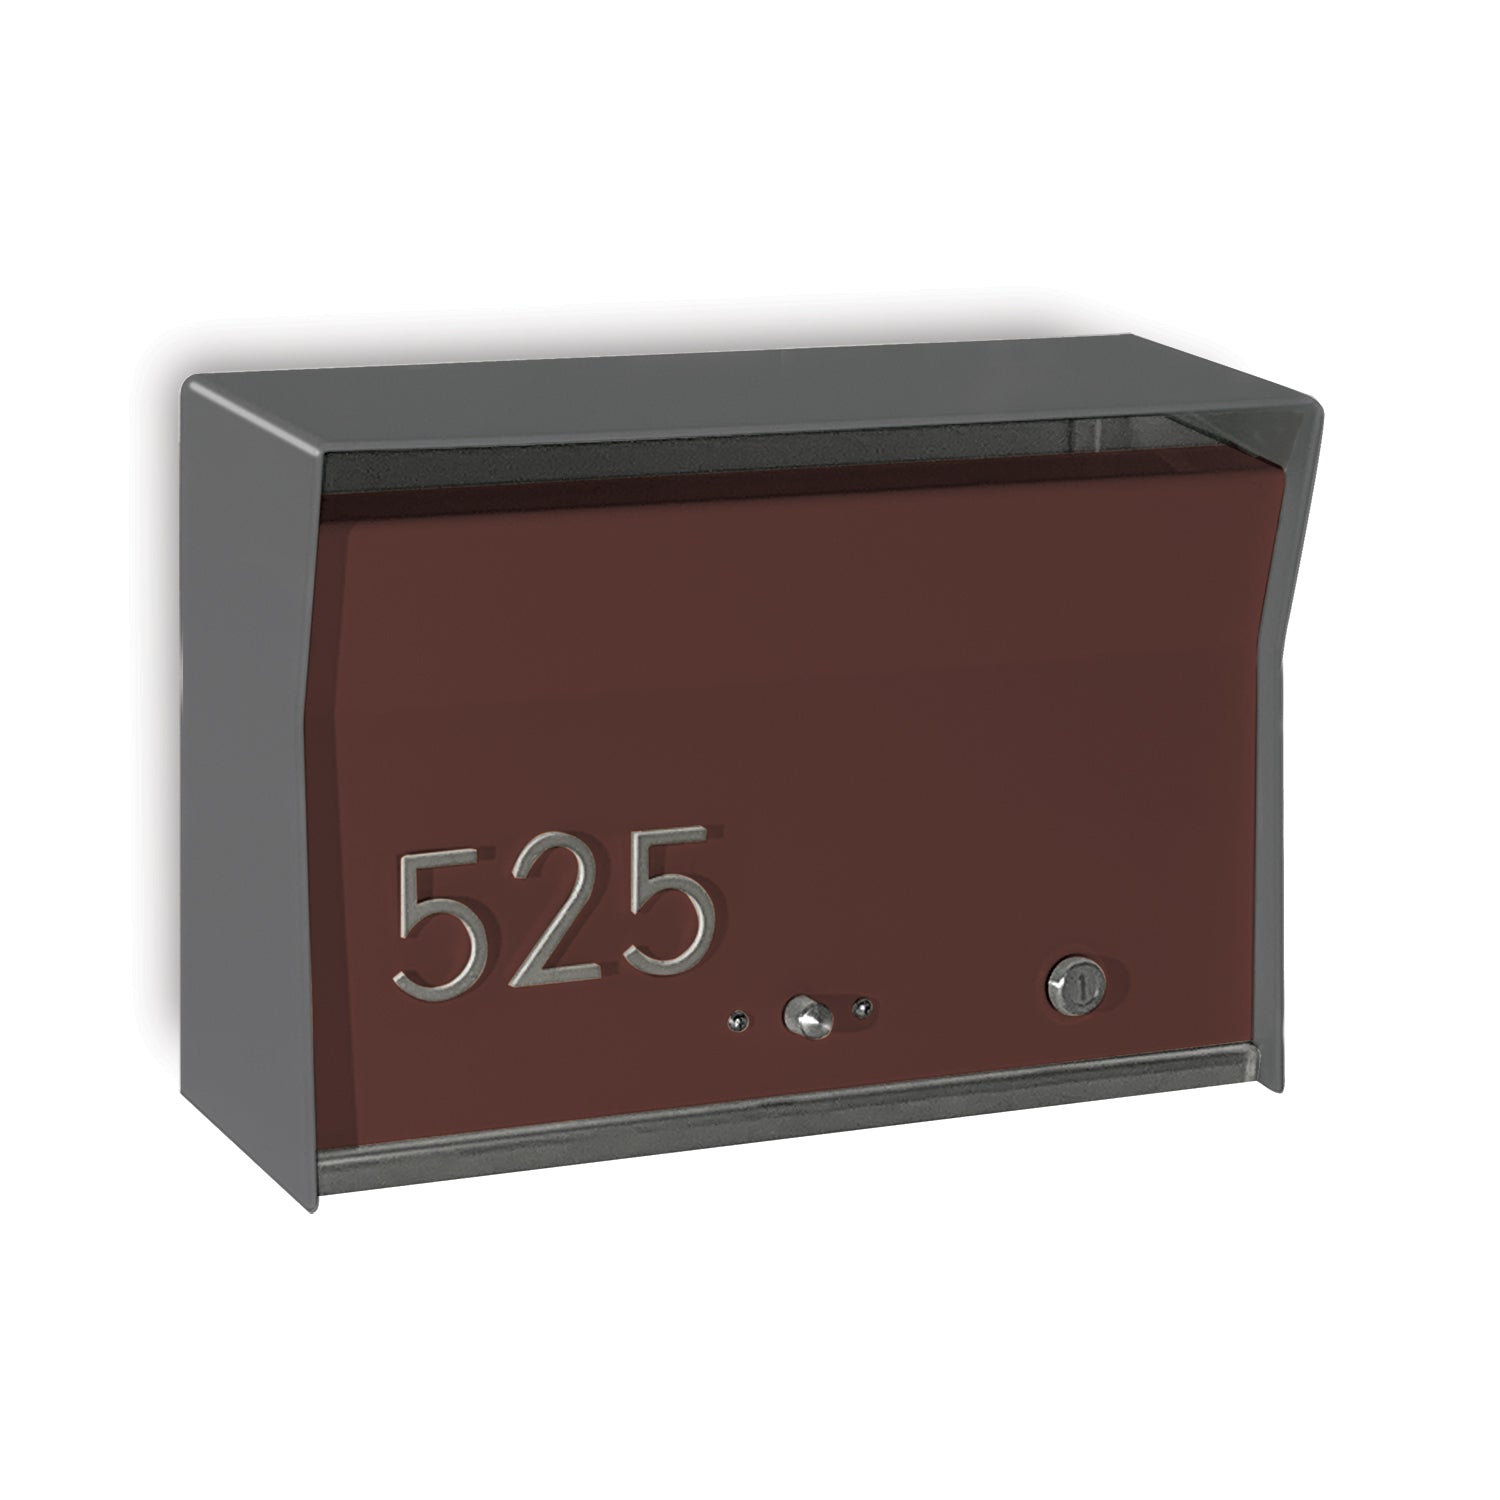 RetroBox Locking Wall Mount Mailbox in designer grey and cooc nut